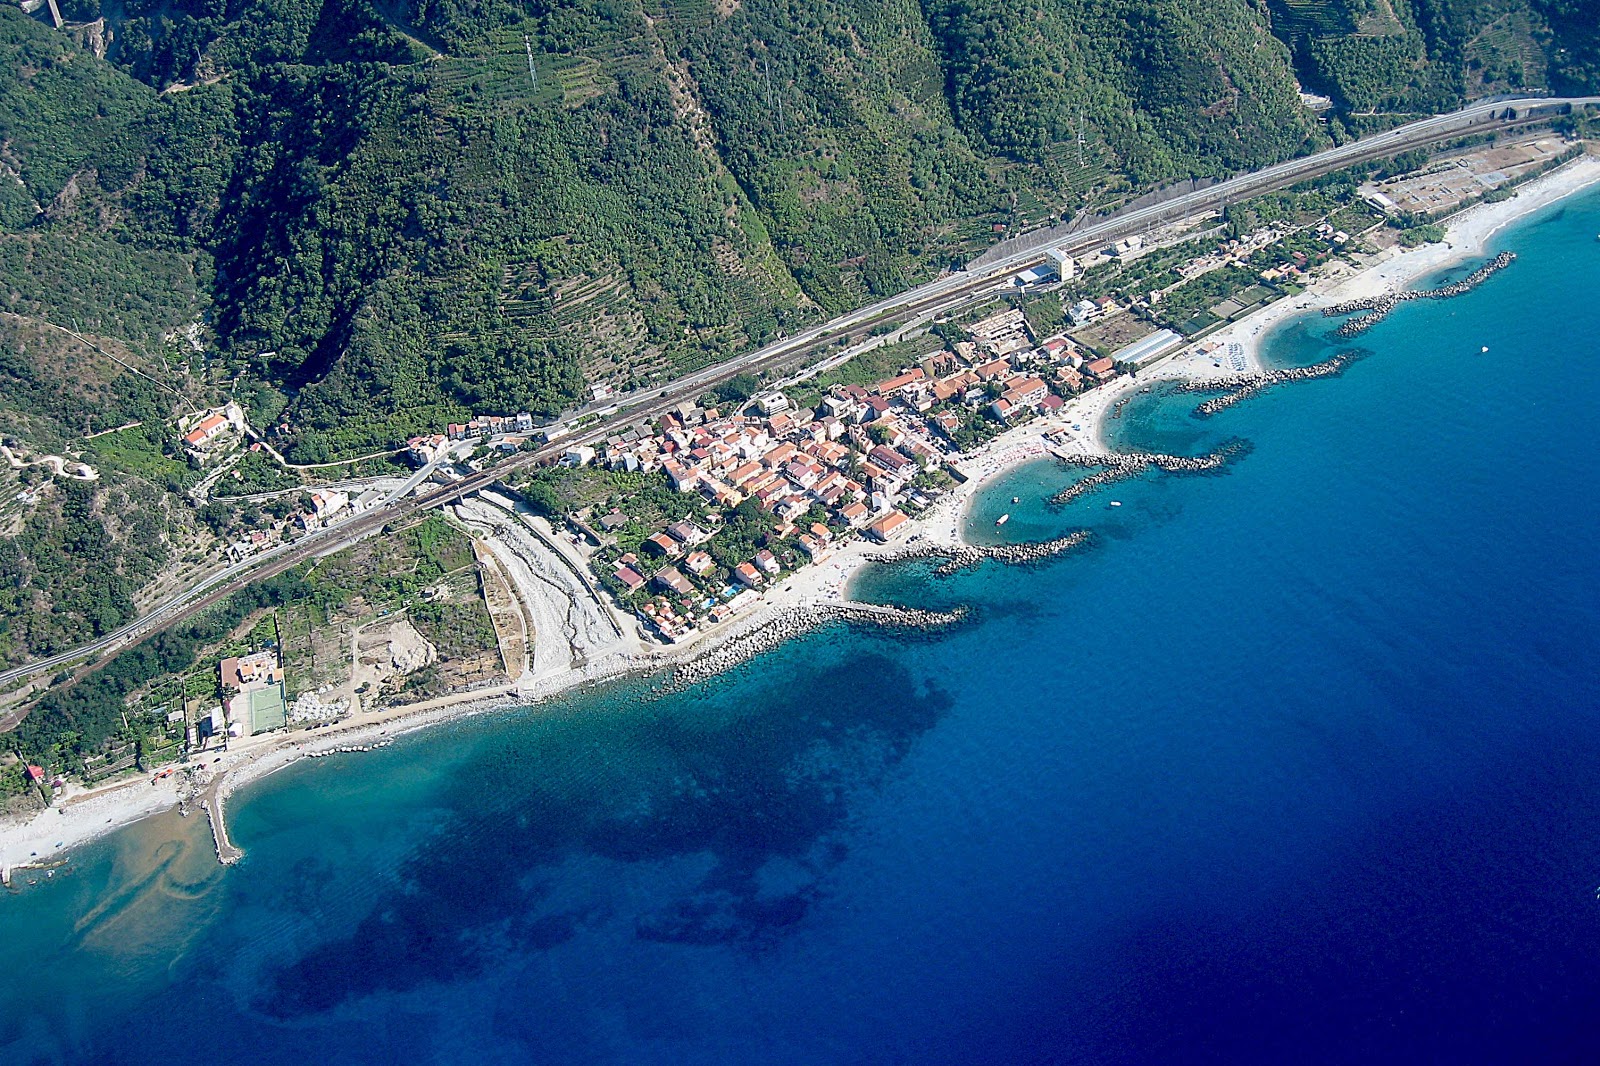 Photo of Spiaggia di Favazzina with spacious multi bays